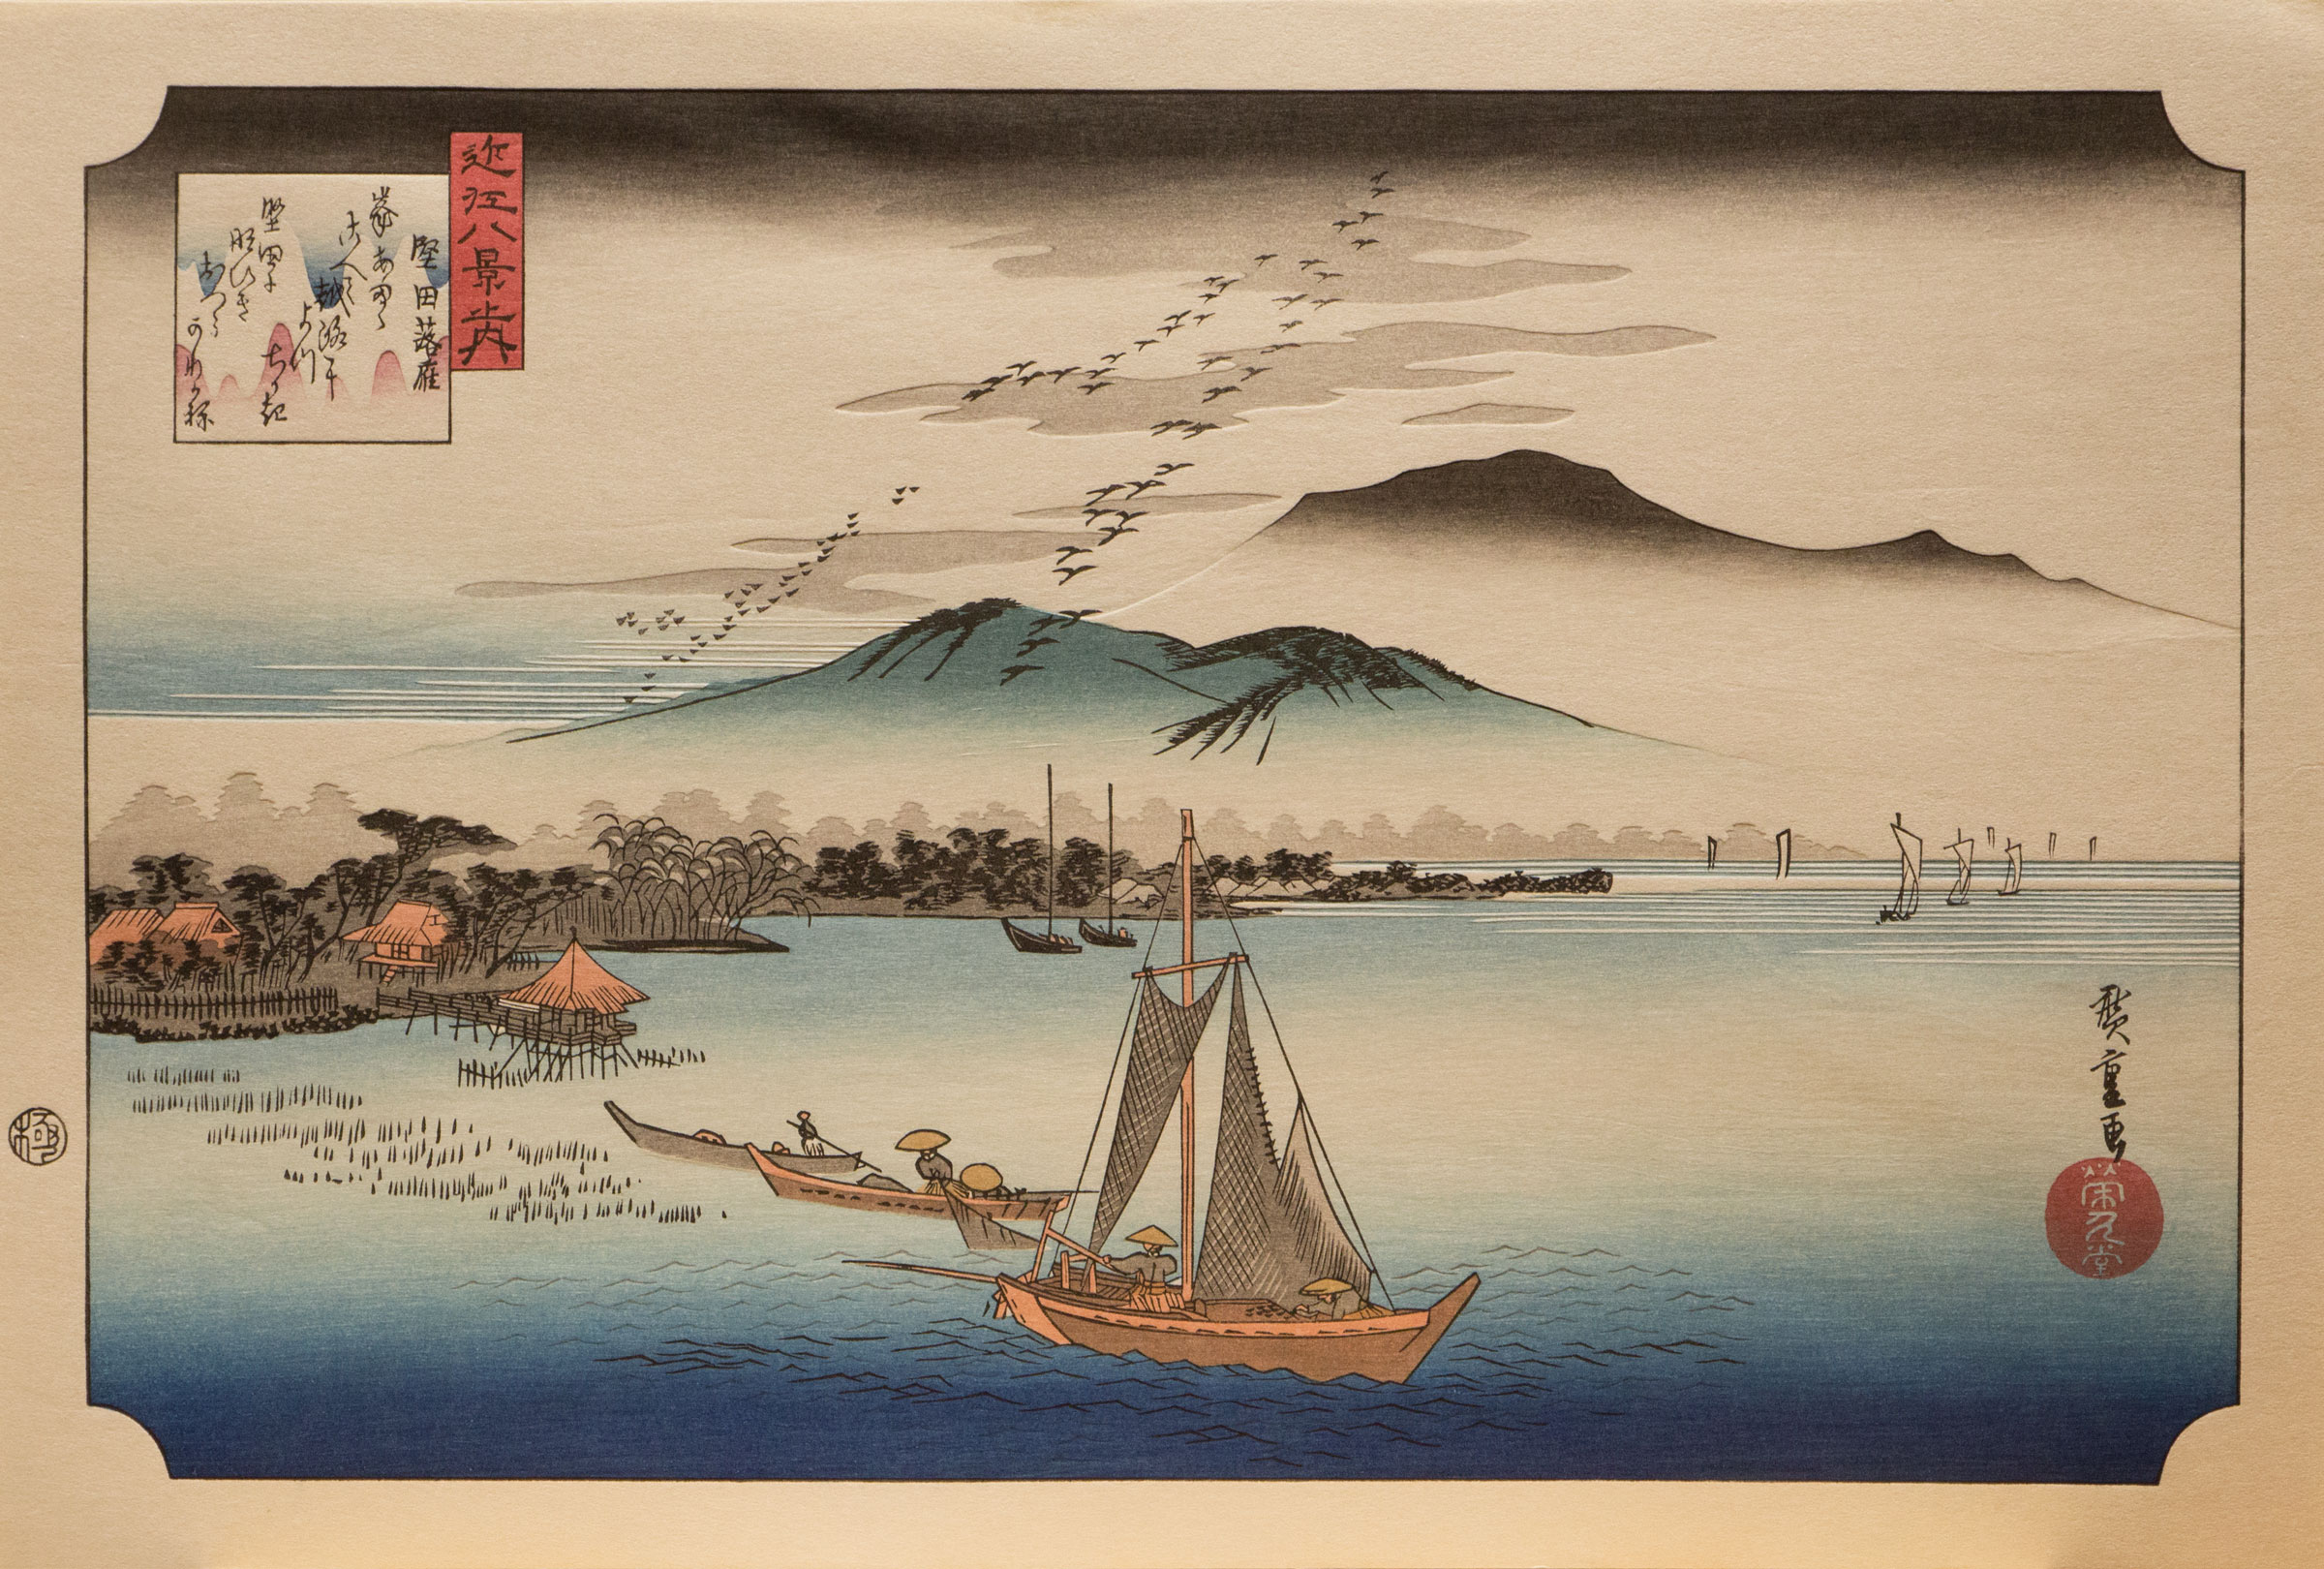 Utagawa Hiroshige Woodblock Print Japanese Art Traditional Artwork Lake Geese Boat Fishing Boat Fish 2400x1620